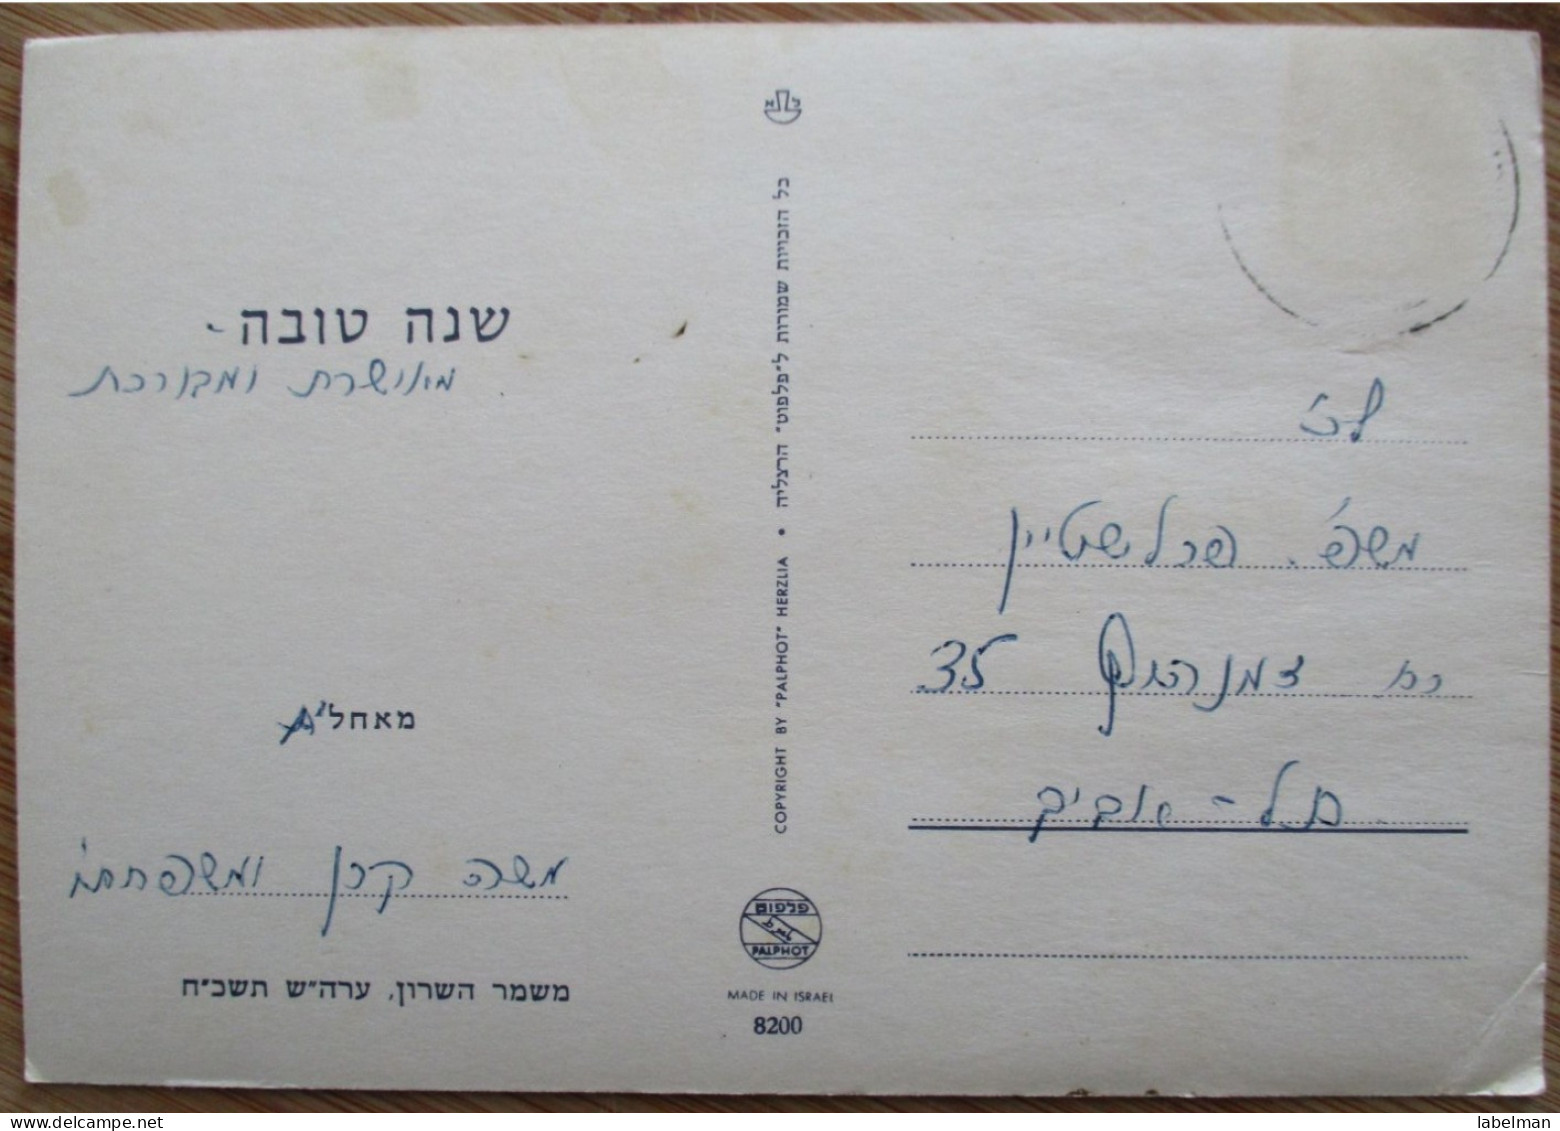 ISRAEL KIBBUTZ MISHMAR HASHARON AK CARD SHANA TOVA NEW YEAR JUDAICA PC CP POSTKARTE CARTE POSTALE POSTCARD ANSICHTSKARTE - Hotelaufkleber